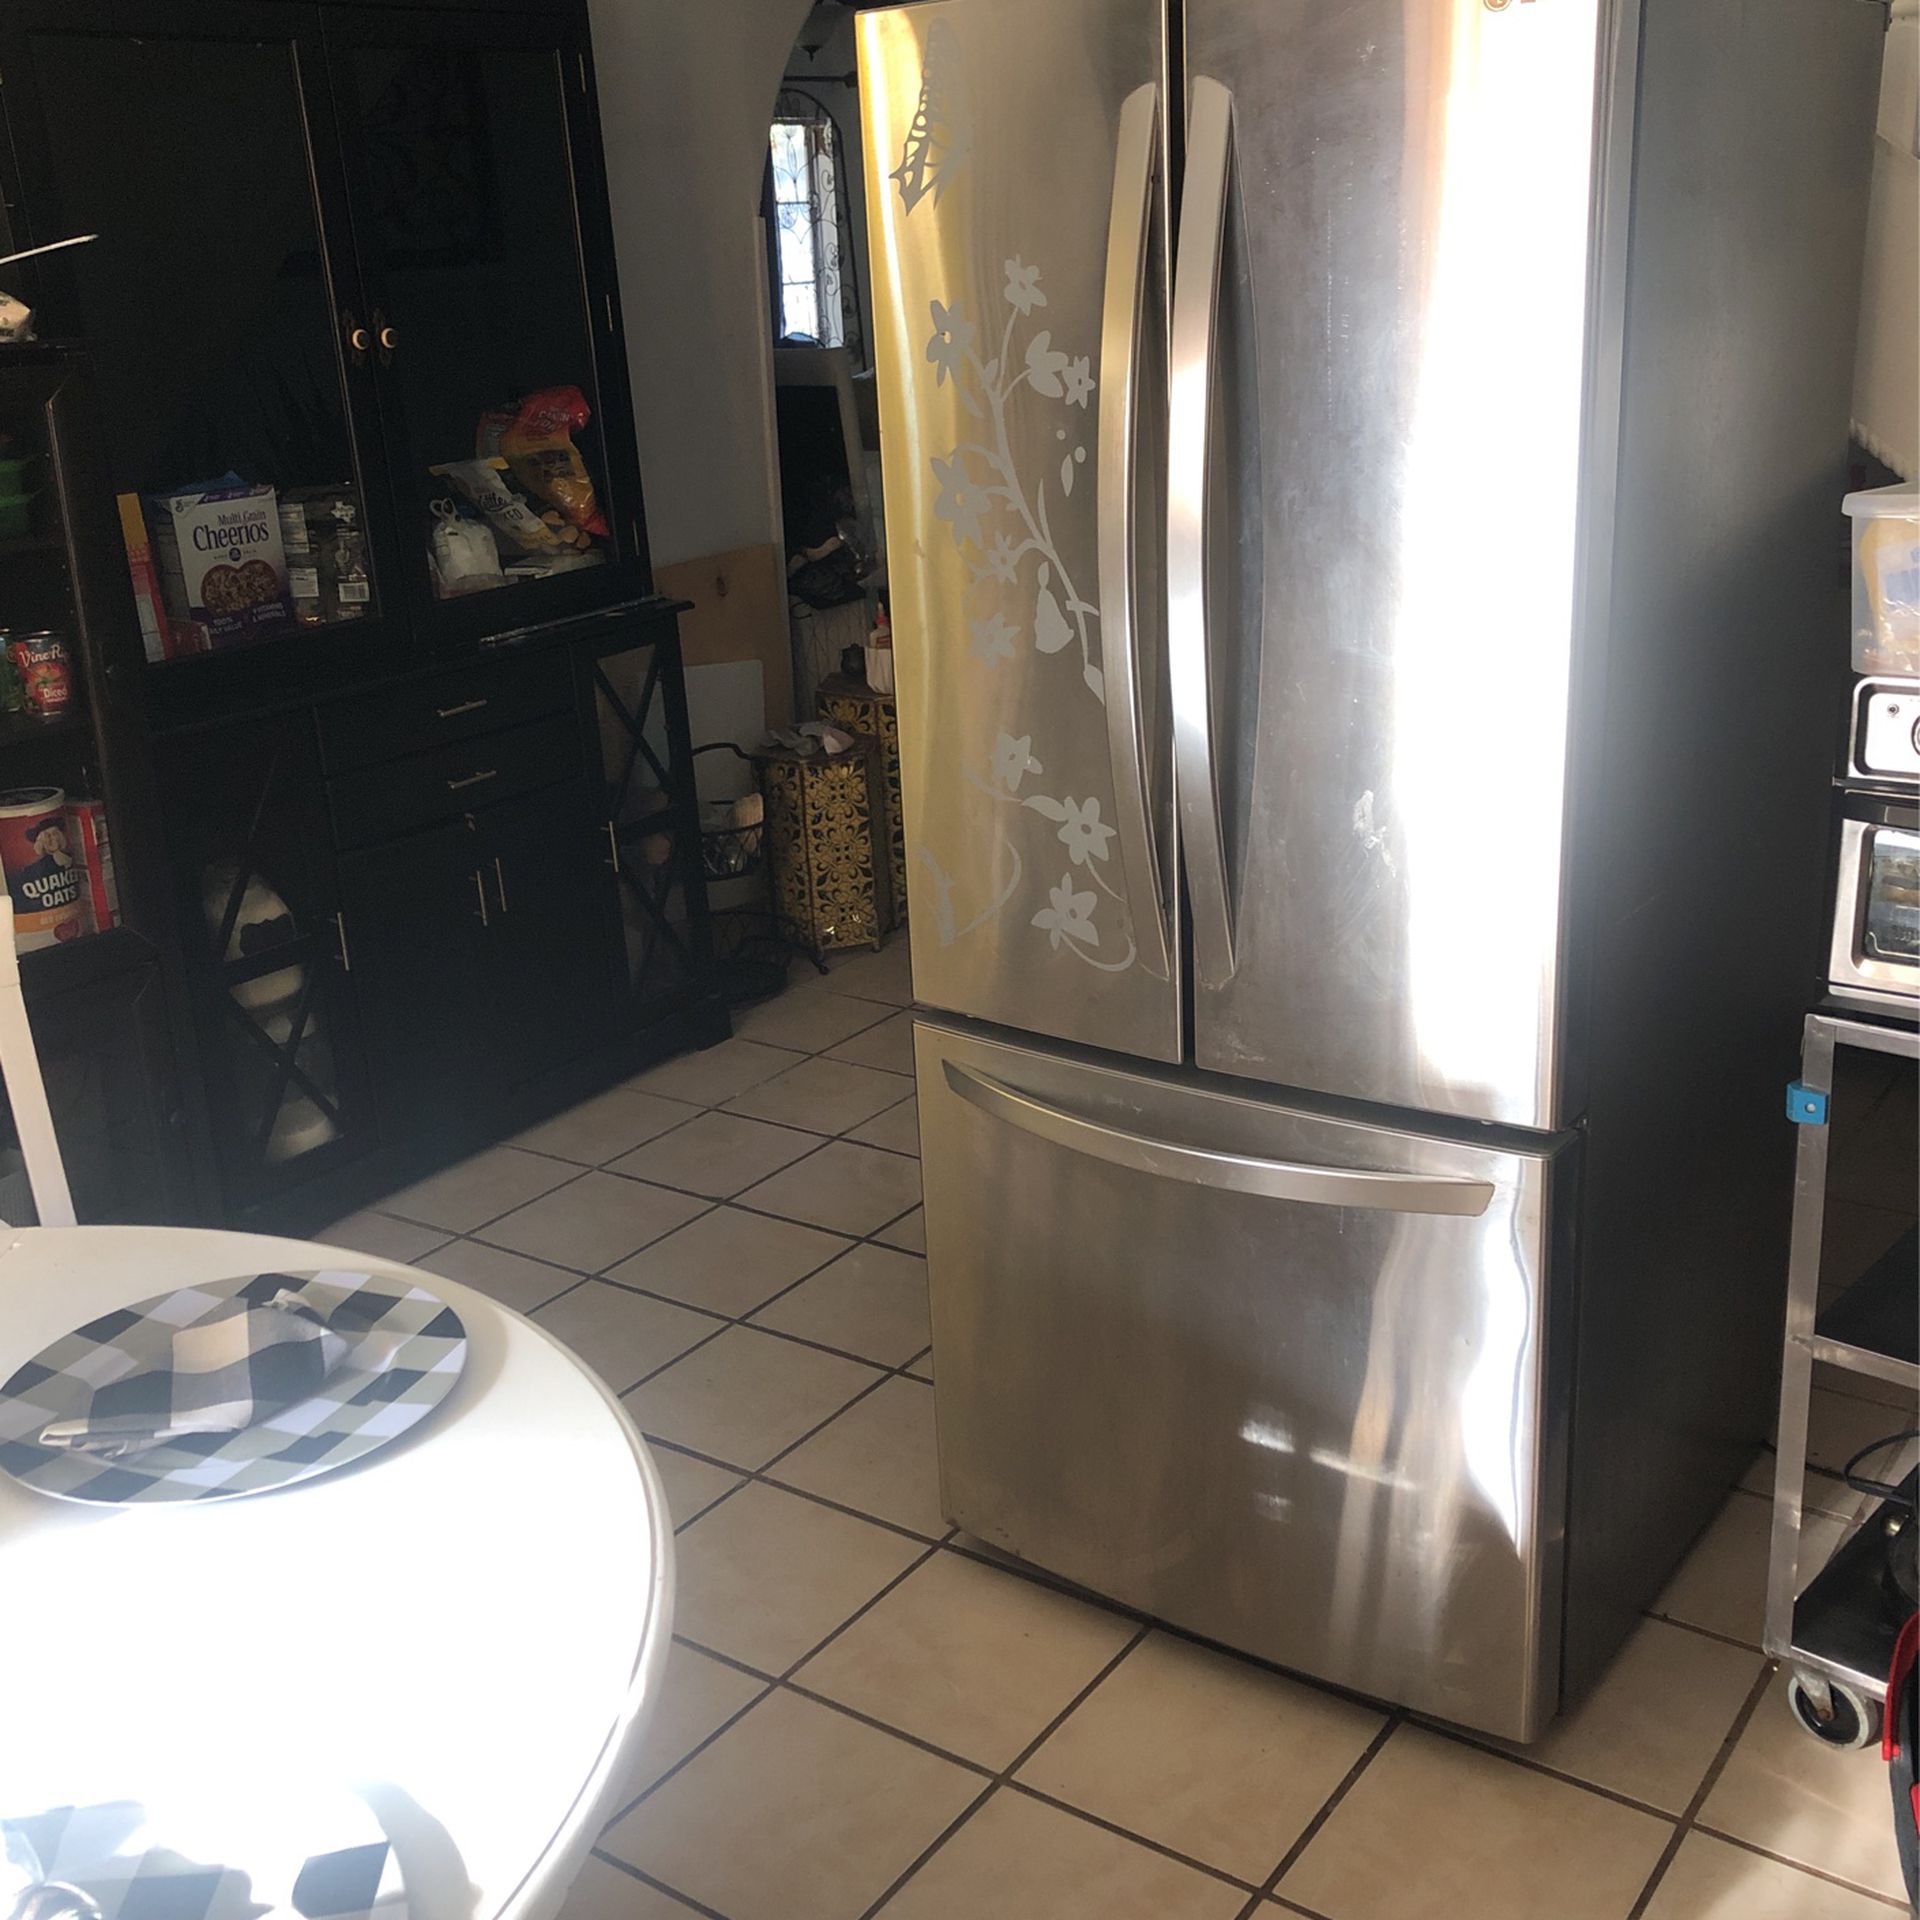 LG Refrigerator / Freezer